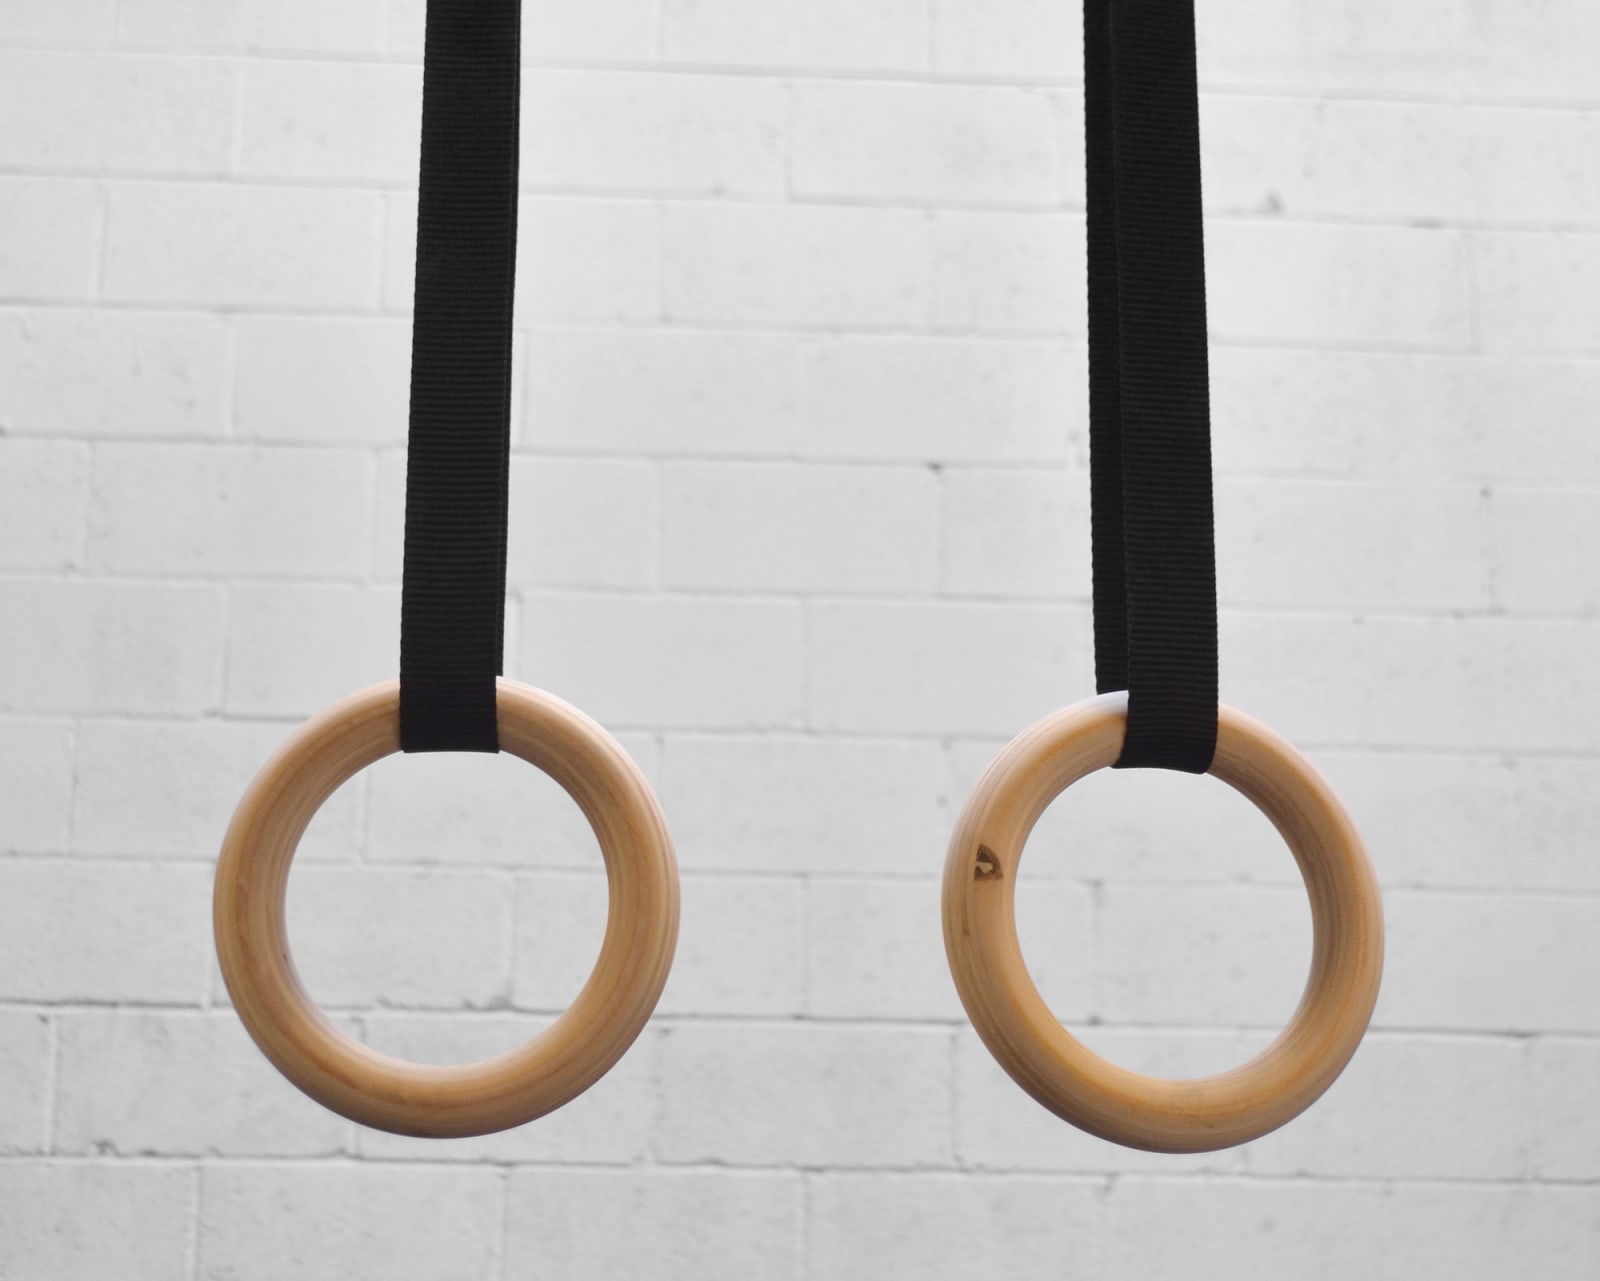 Wooden Gymnastic Rings Gymnastics Rings Gym Ring Exercise Rings Garage Fit Wood Gym Rings Fitness Rings Gymnast Rings 